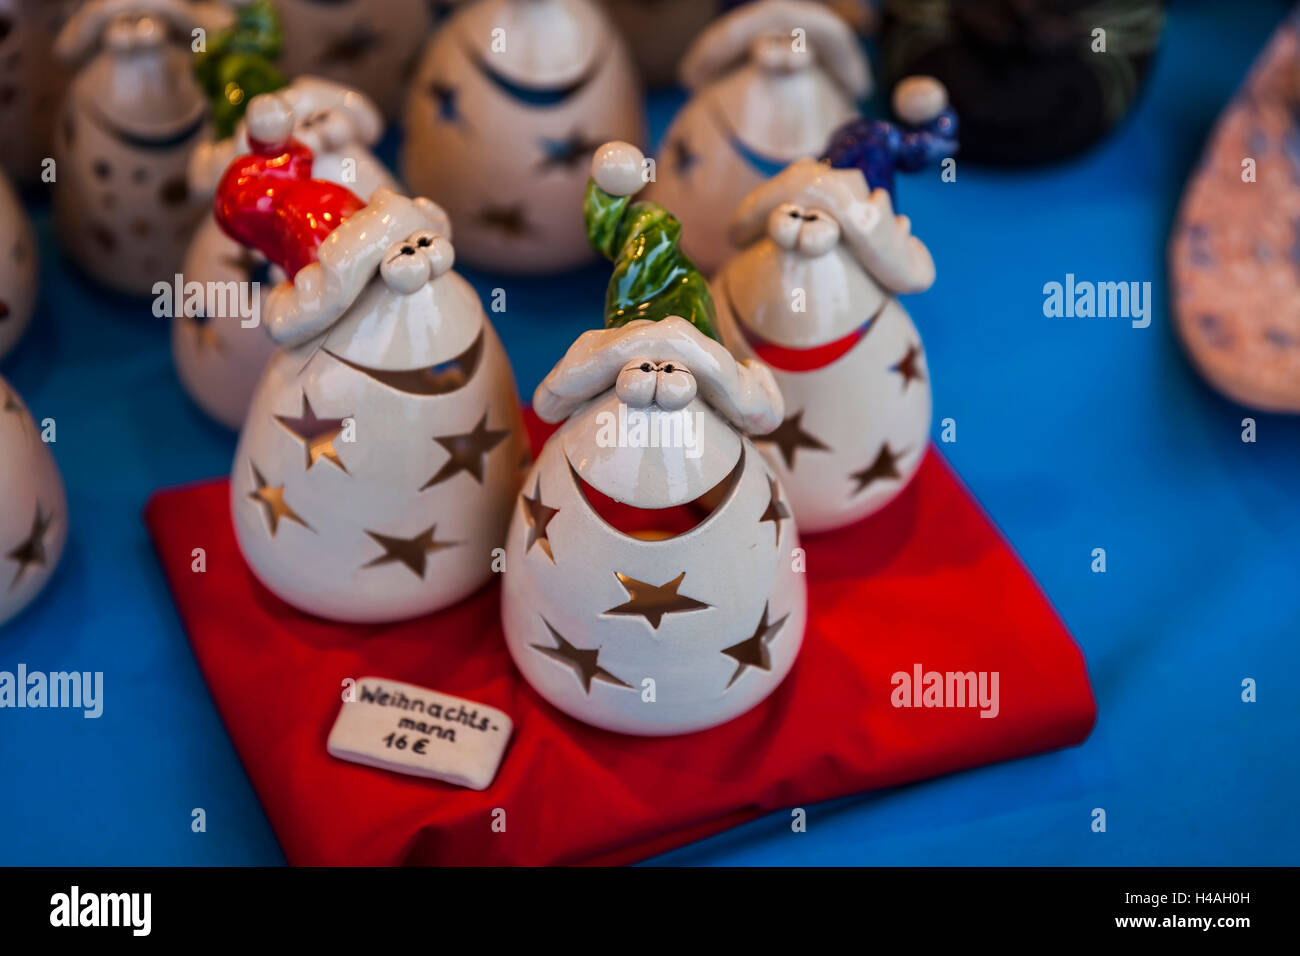 Austria, Vienna, Christmas market, tea candle figrines, Santa Claus figurines Stock Photo